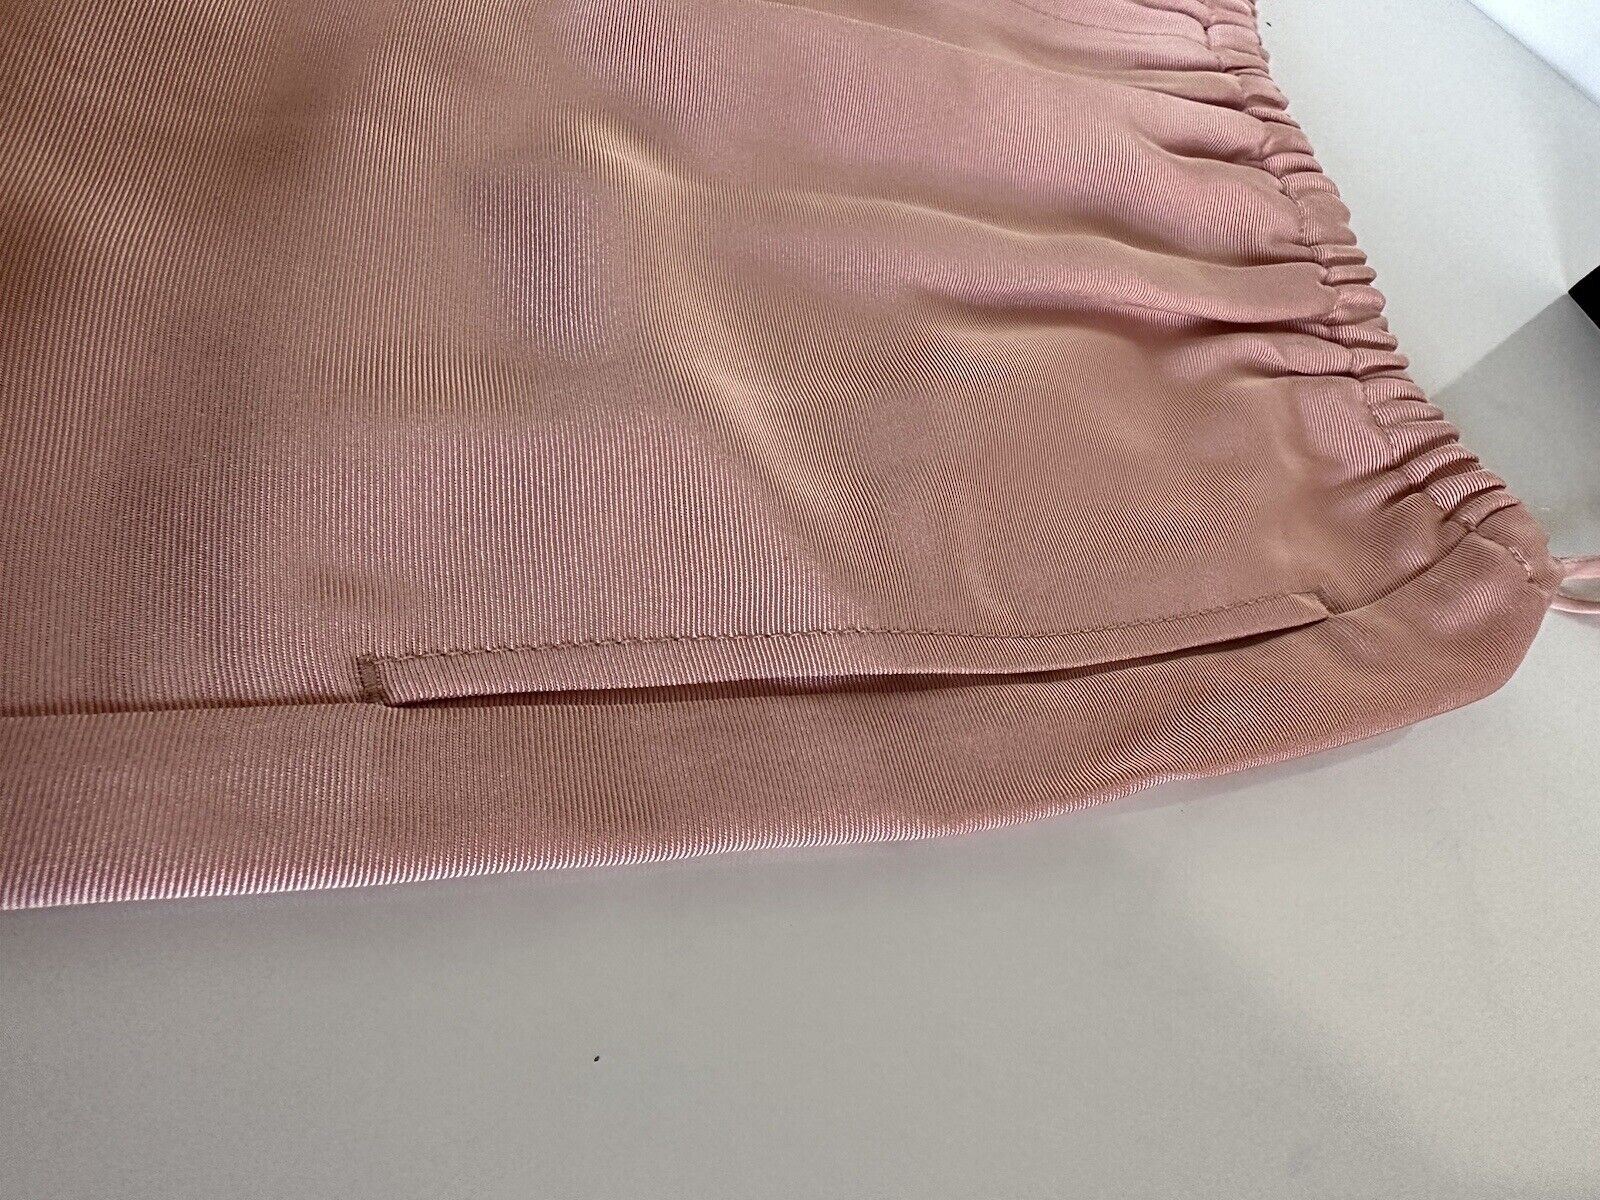 Neu mit Etikett: Gucci Damen-Shorts aus Seide/Viskose, Eisrosa, 36 (XS) 625238, hergestellt in Italien